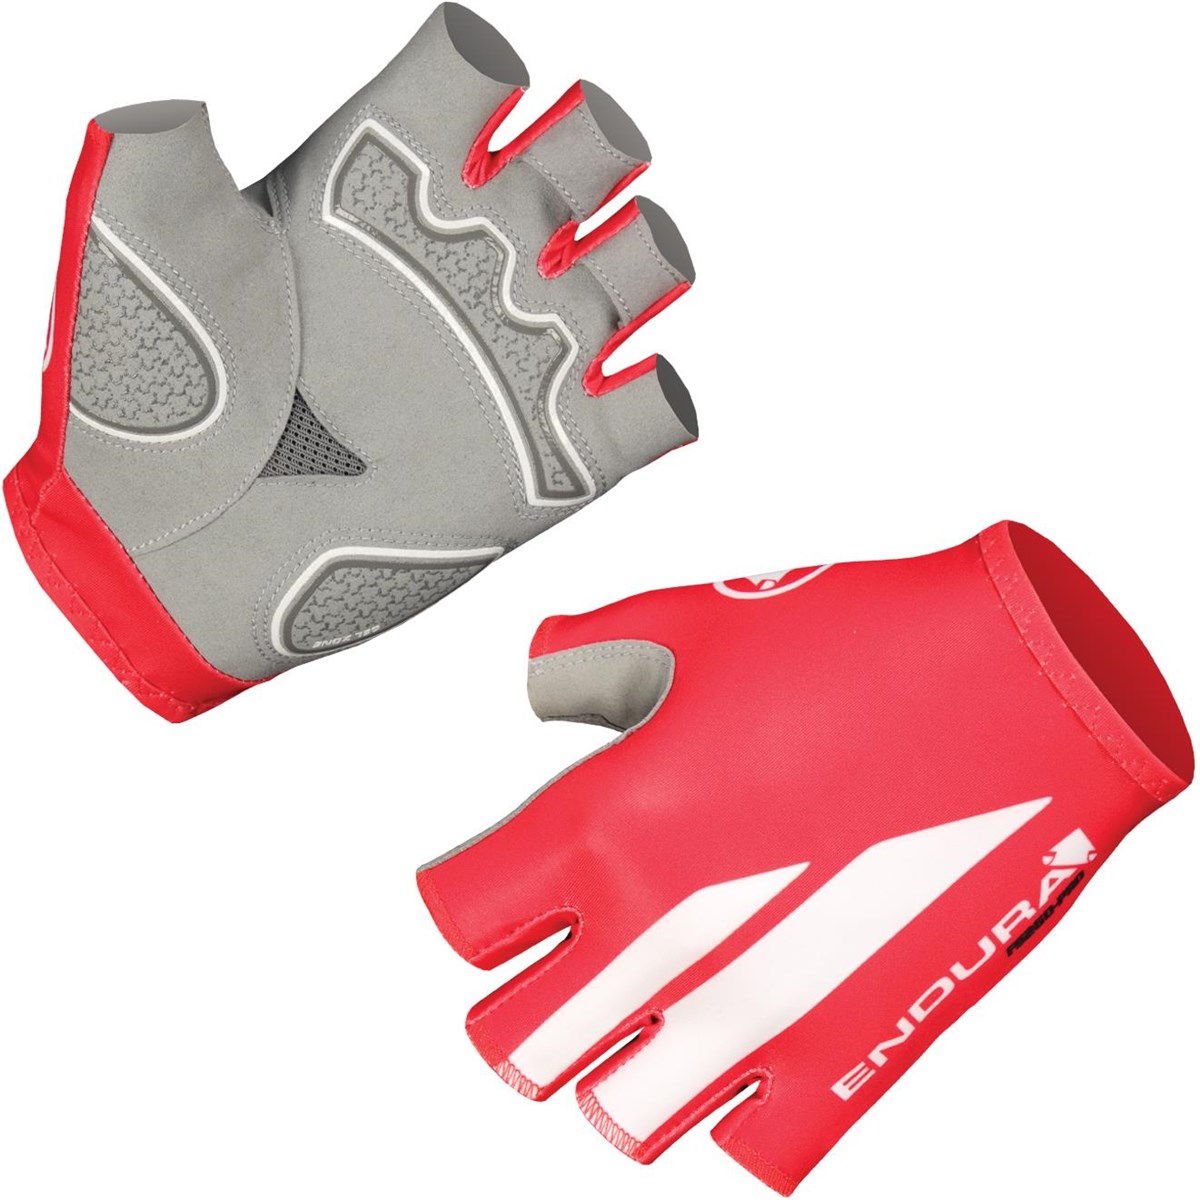 Endura FS260 Pro Print Short Finger Cycling Gloves